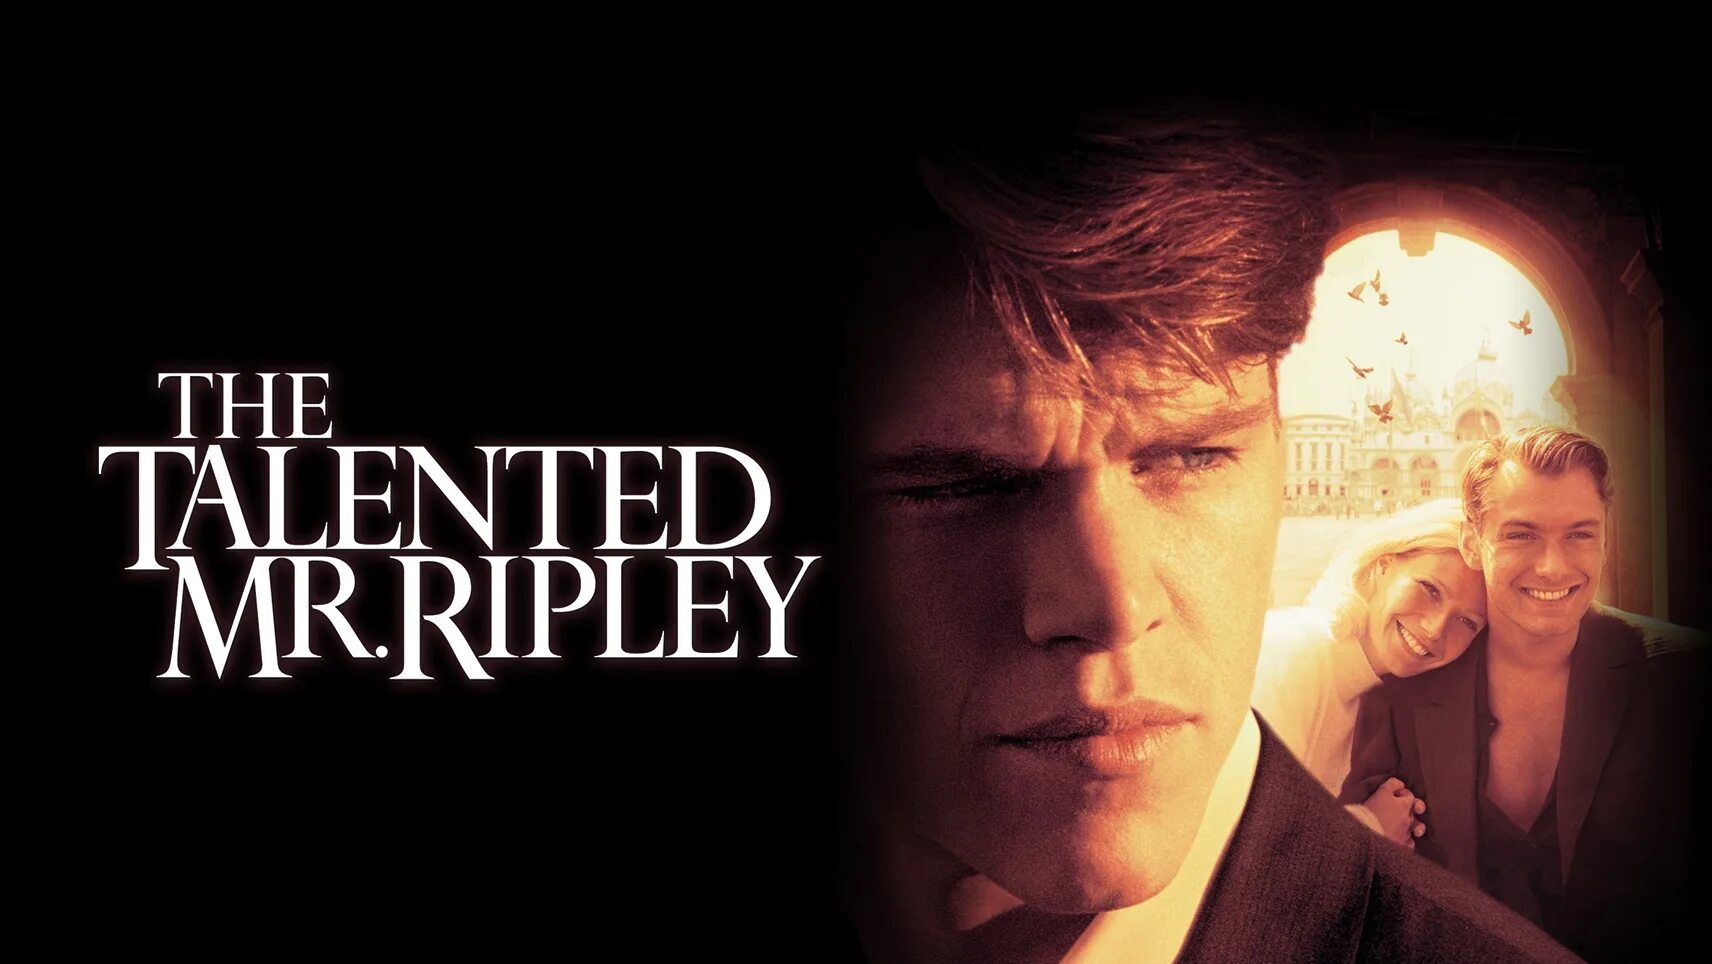 The talented Mr Ripley 1999. Мэтт Дэймон талантливый Мистер Рипли. Гвинет Пэлтроу талантливый Мистер Рипли. Джуд Лоу талантливый Мистер Рипли.